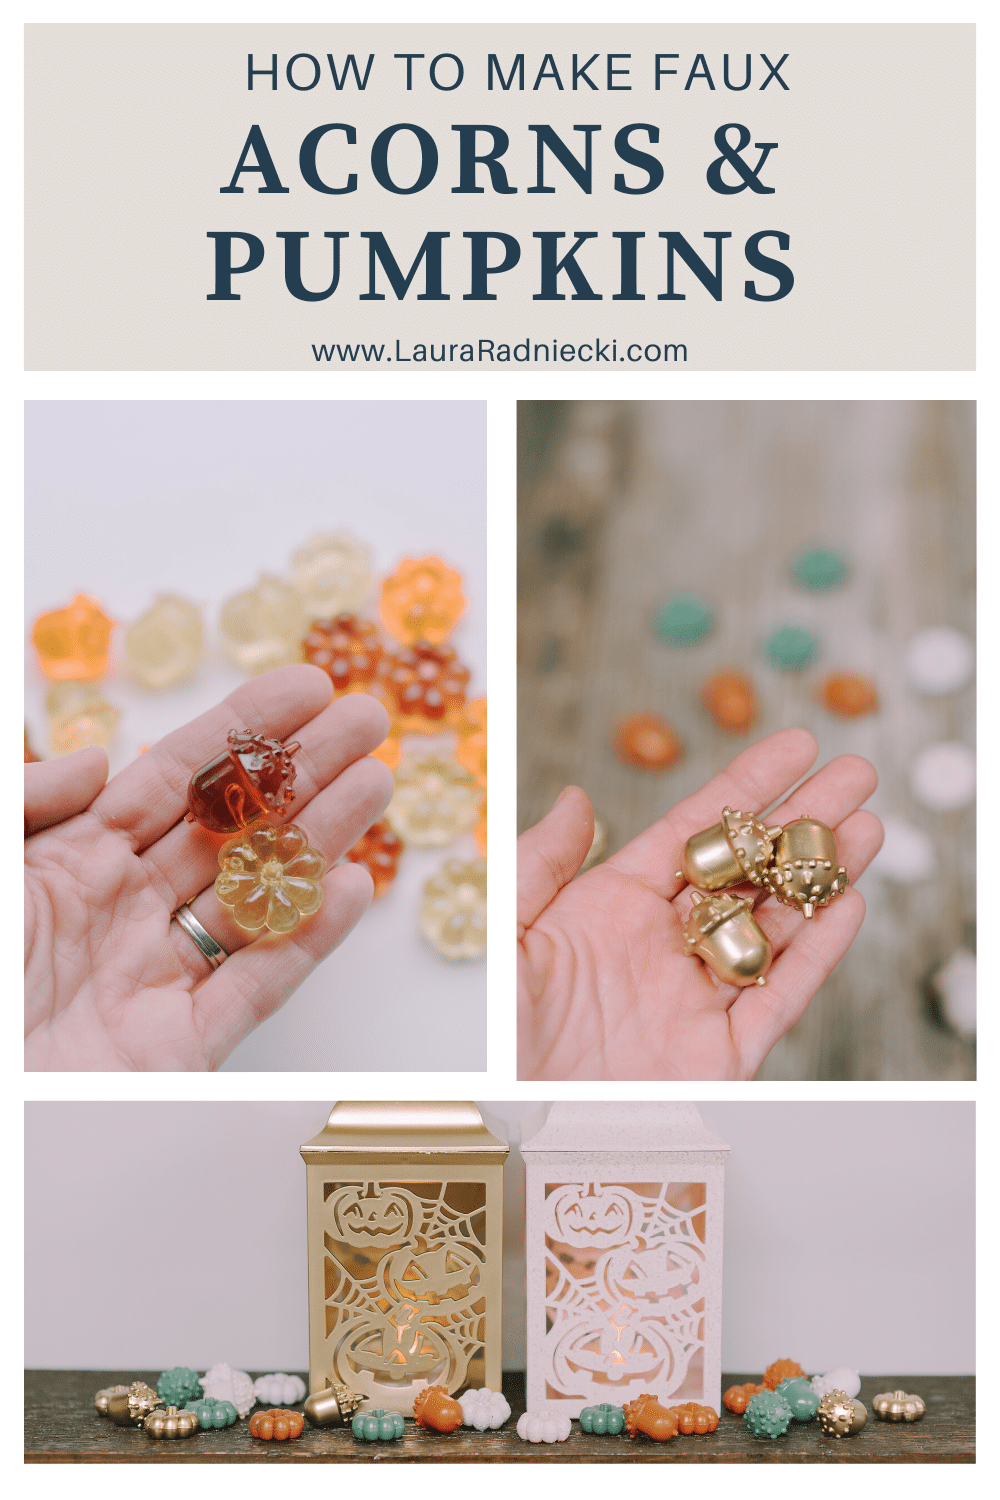 DIY Painted Faux Acorns and Pumpkins